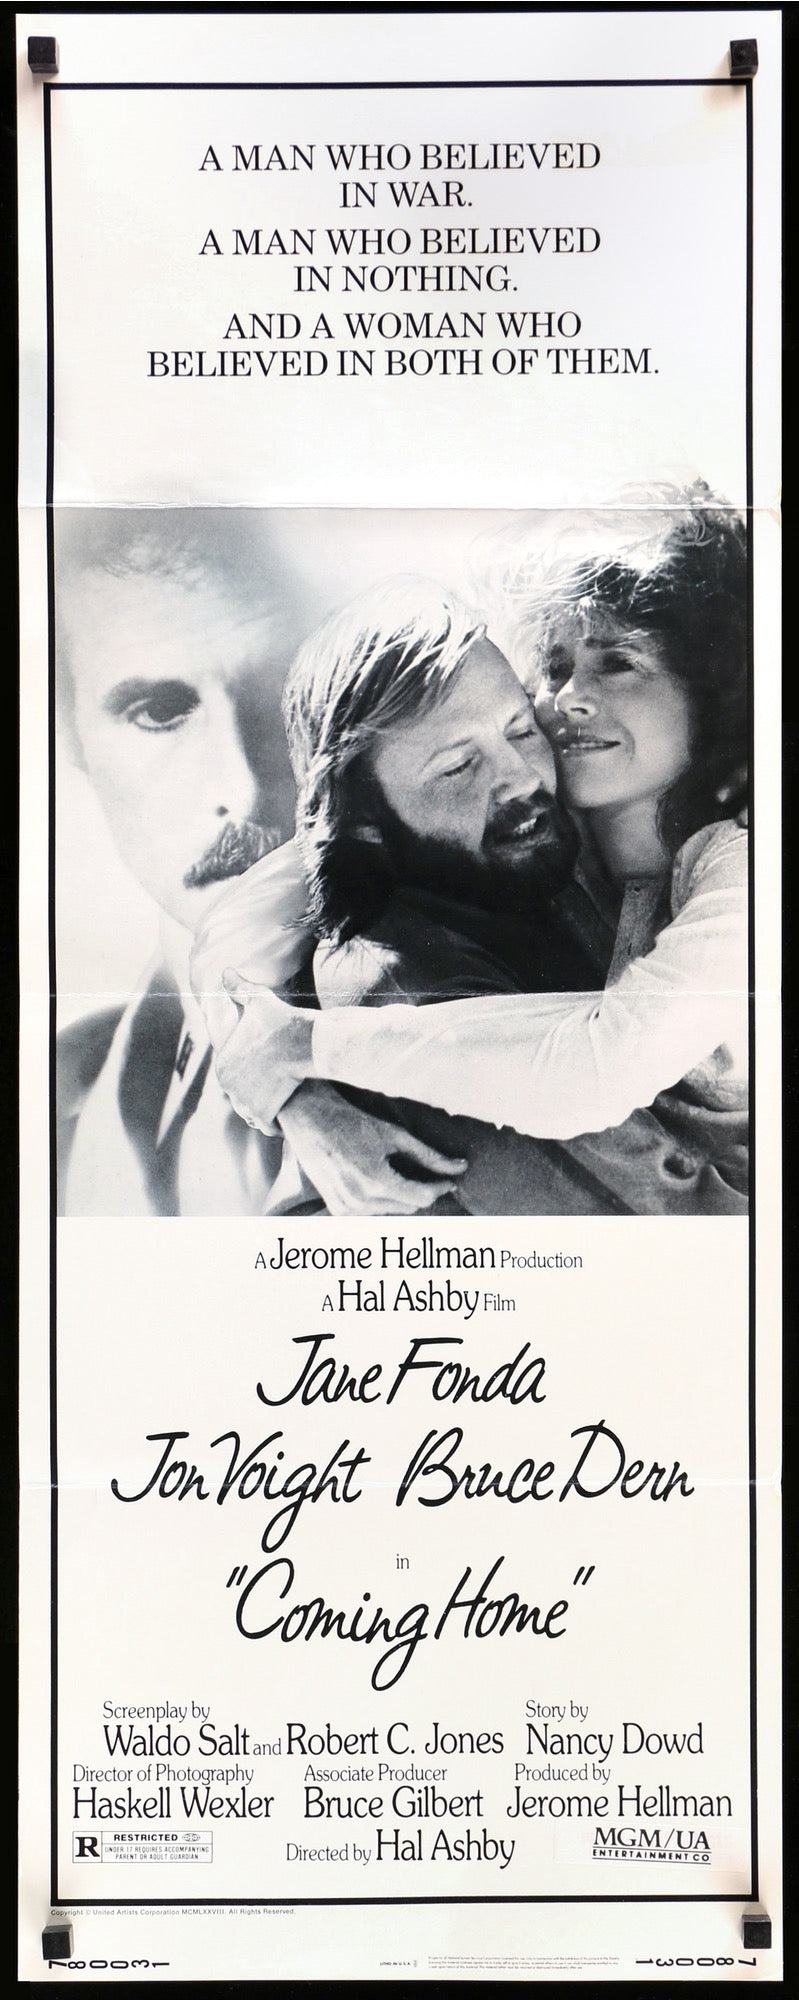 Coming Home (1978) original movie poster for sale at Original Film Art